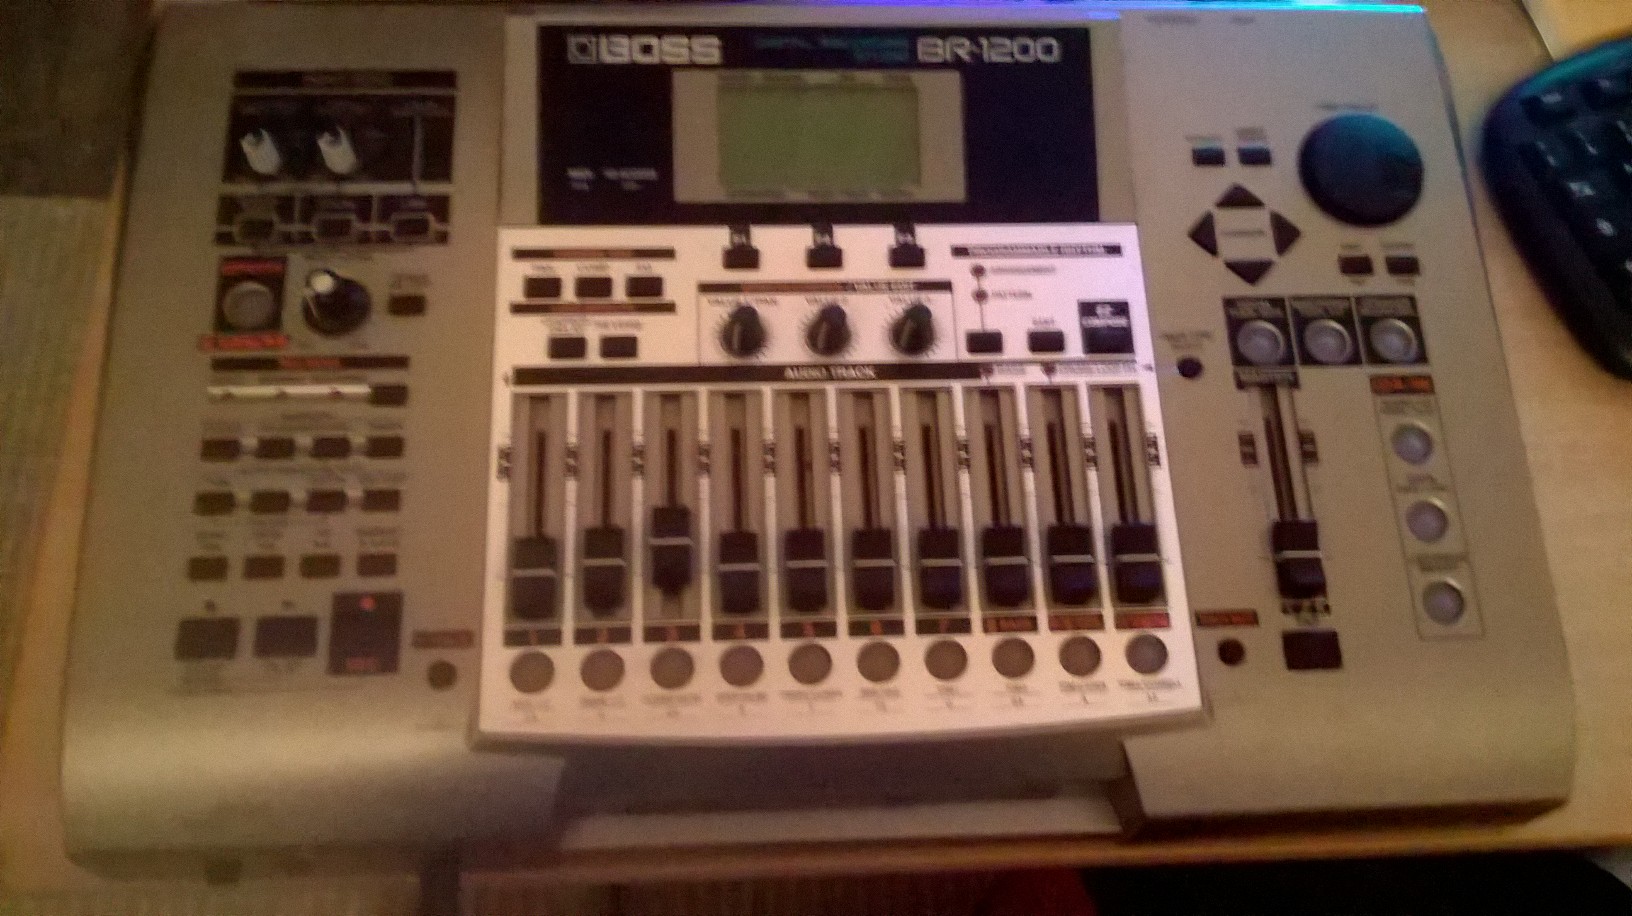 BR-1200CD Digital Recording Studio Boss - Audiofanzine